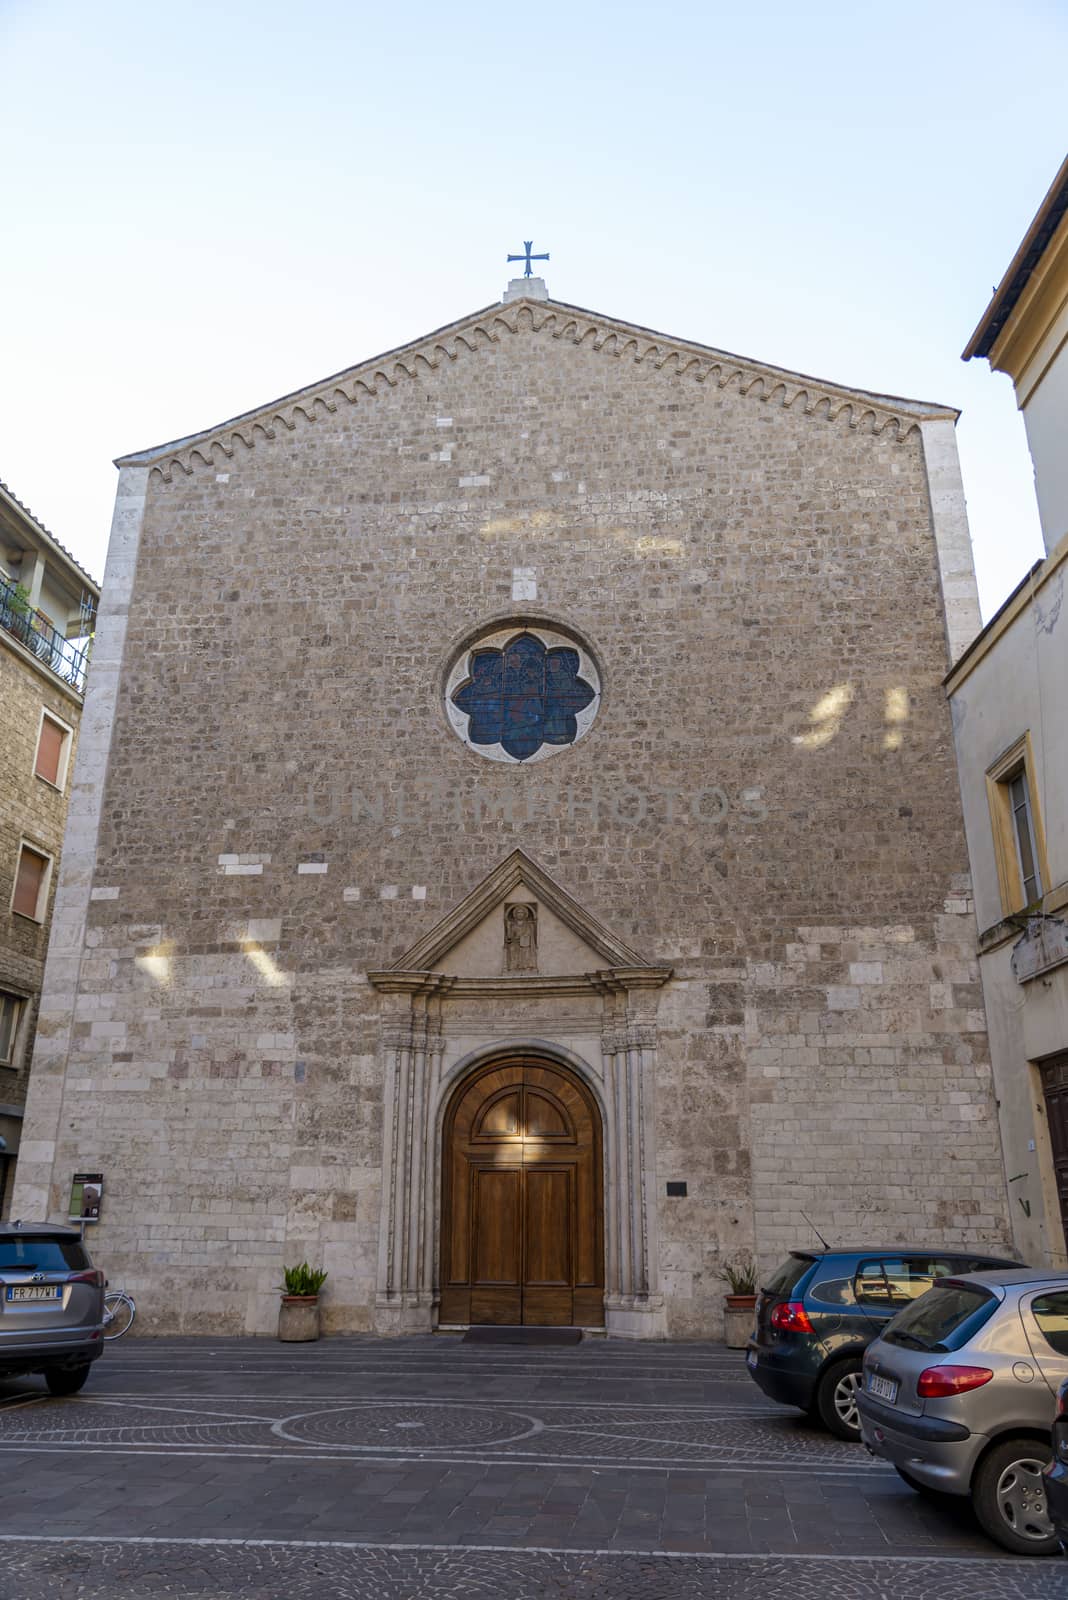 terni, italy august 28 2020: church of san pietro in the center of terni